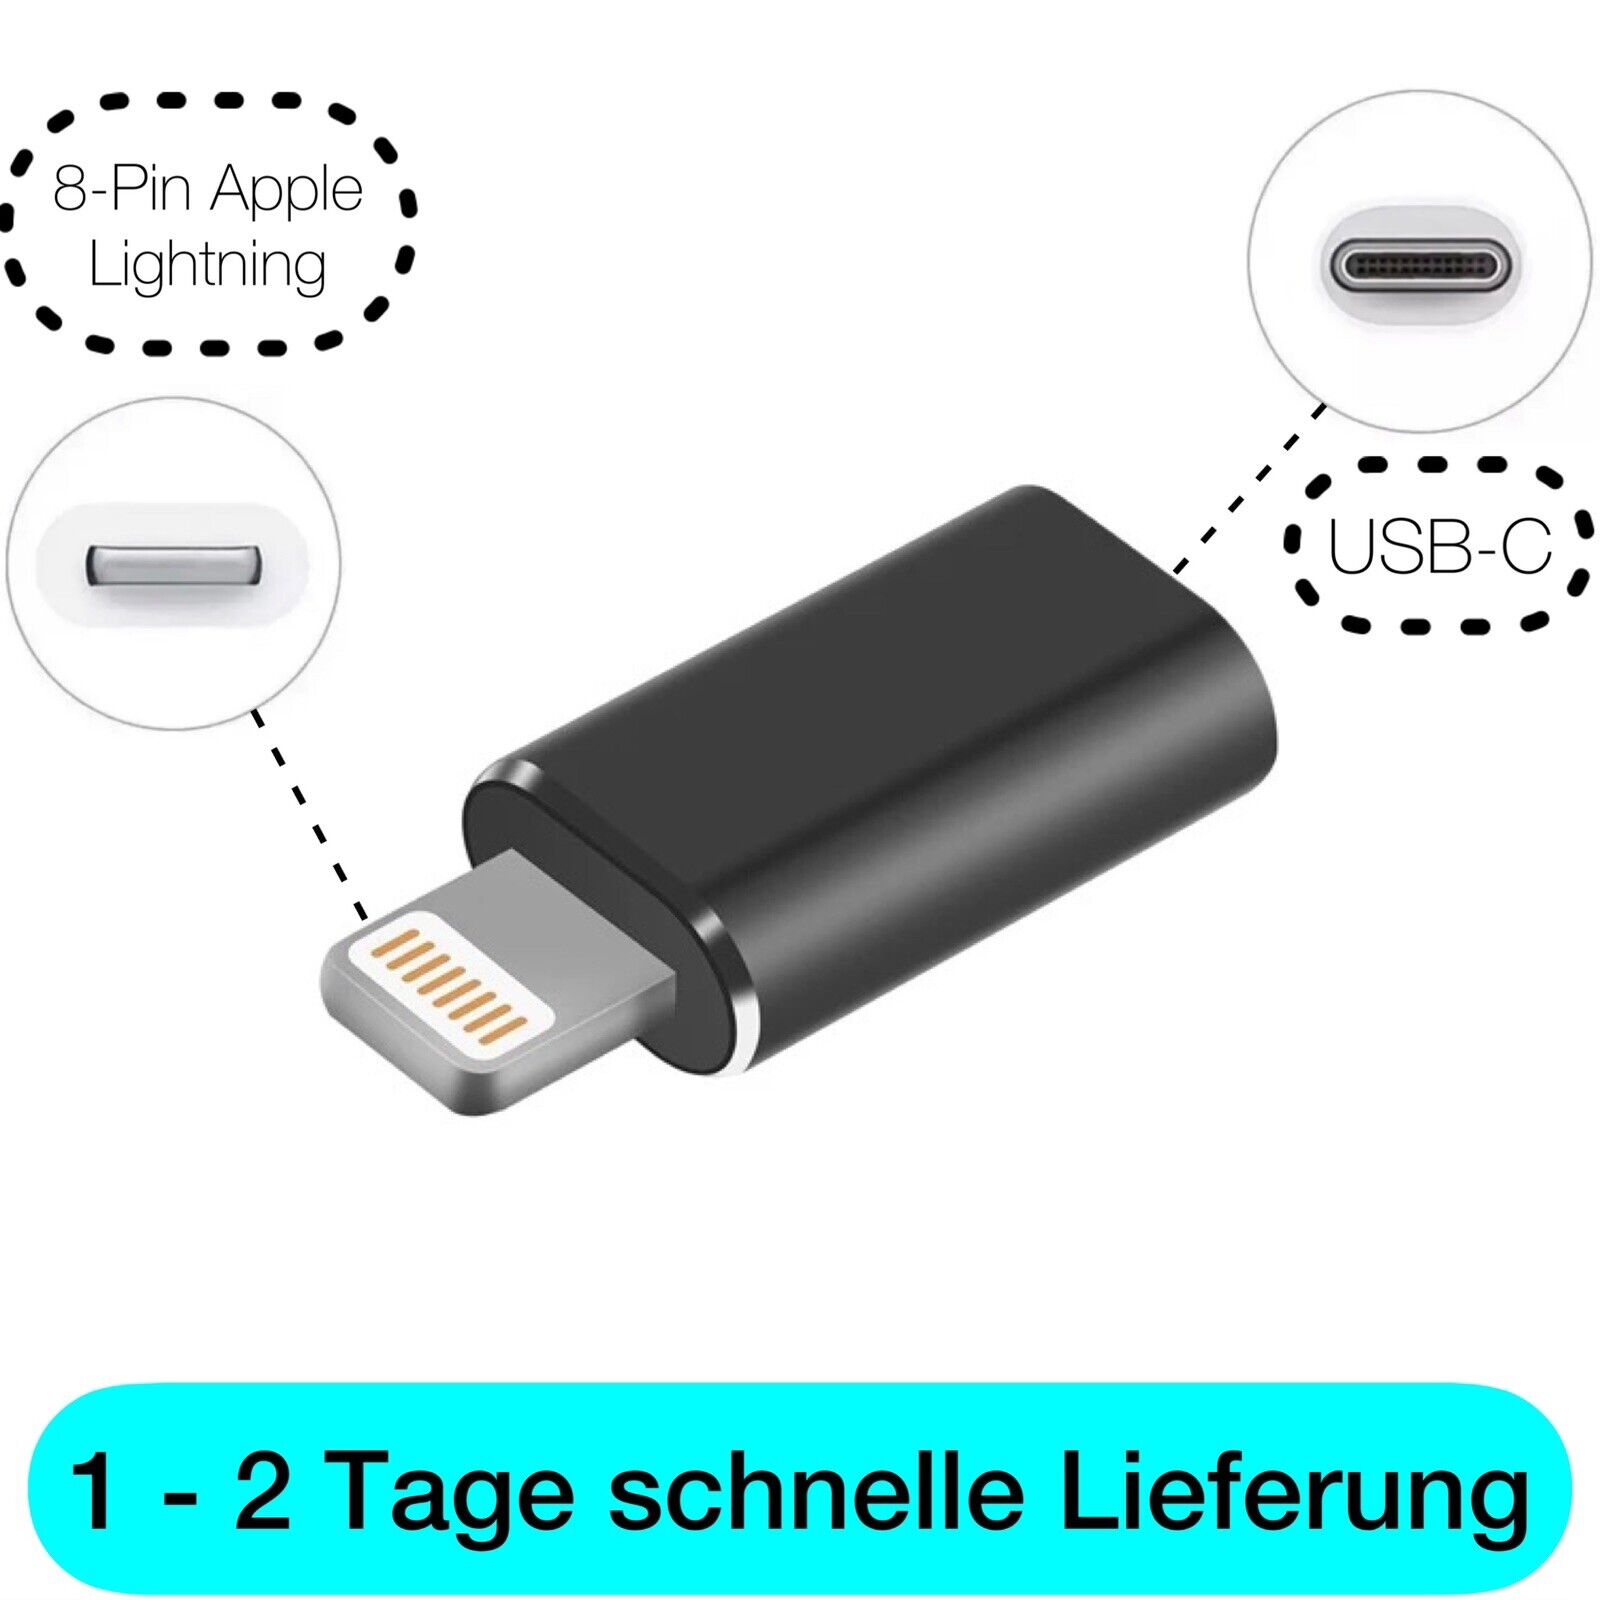 USB-C auf Apple Adapter für iPhone iPad iPod AirPod Laden Datentransfer